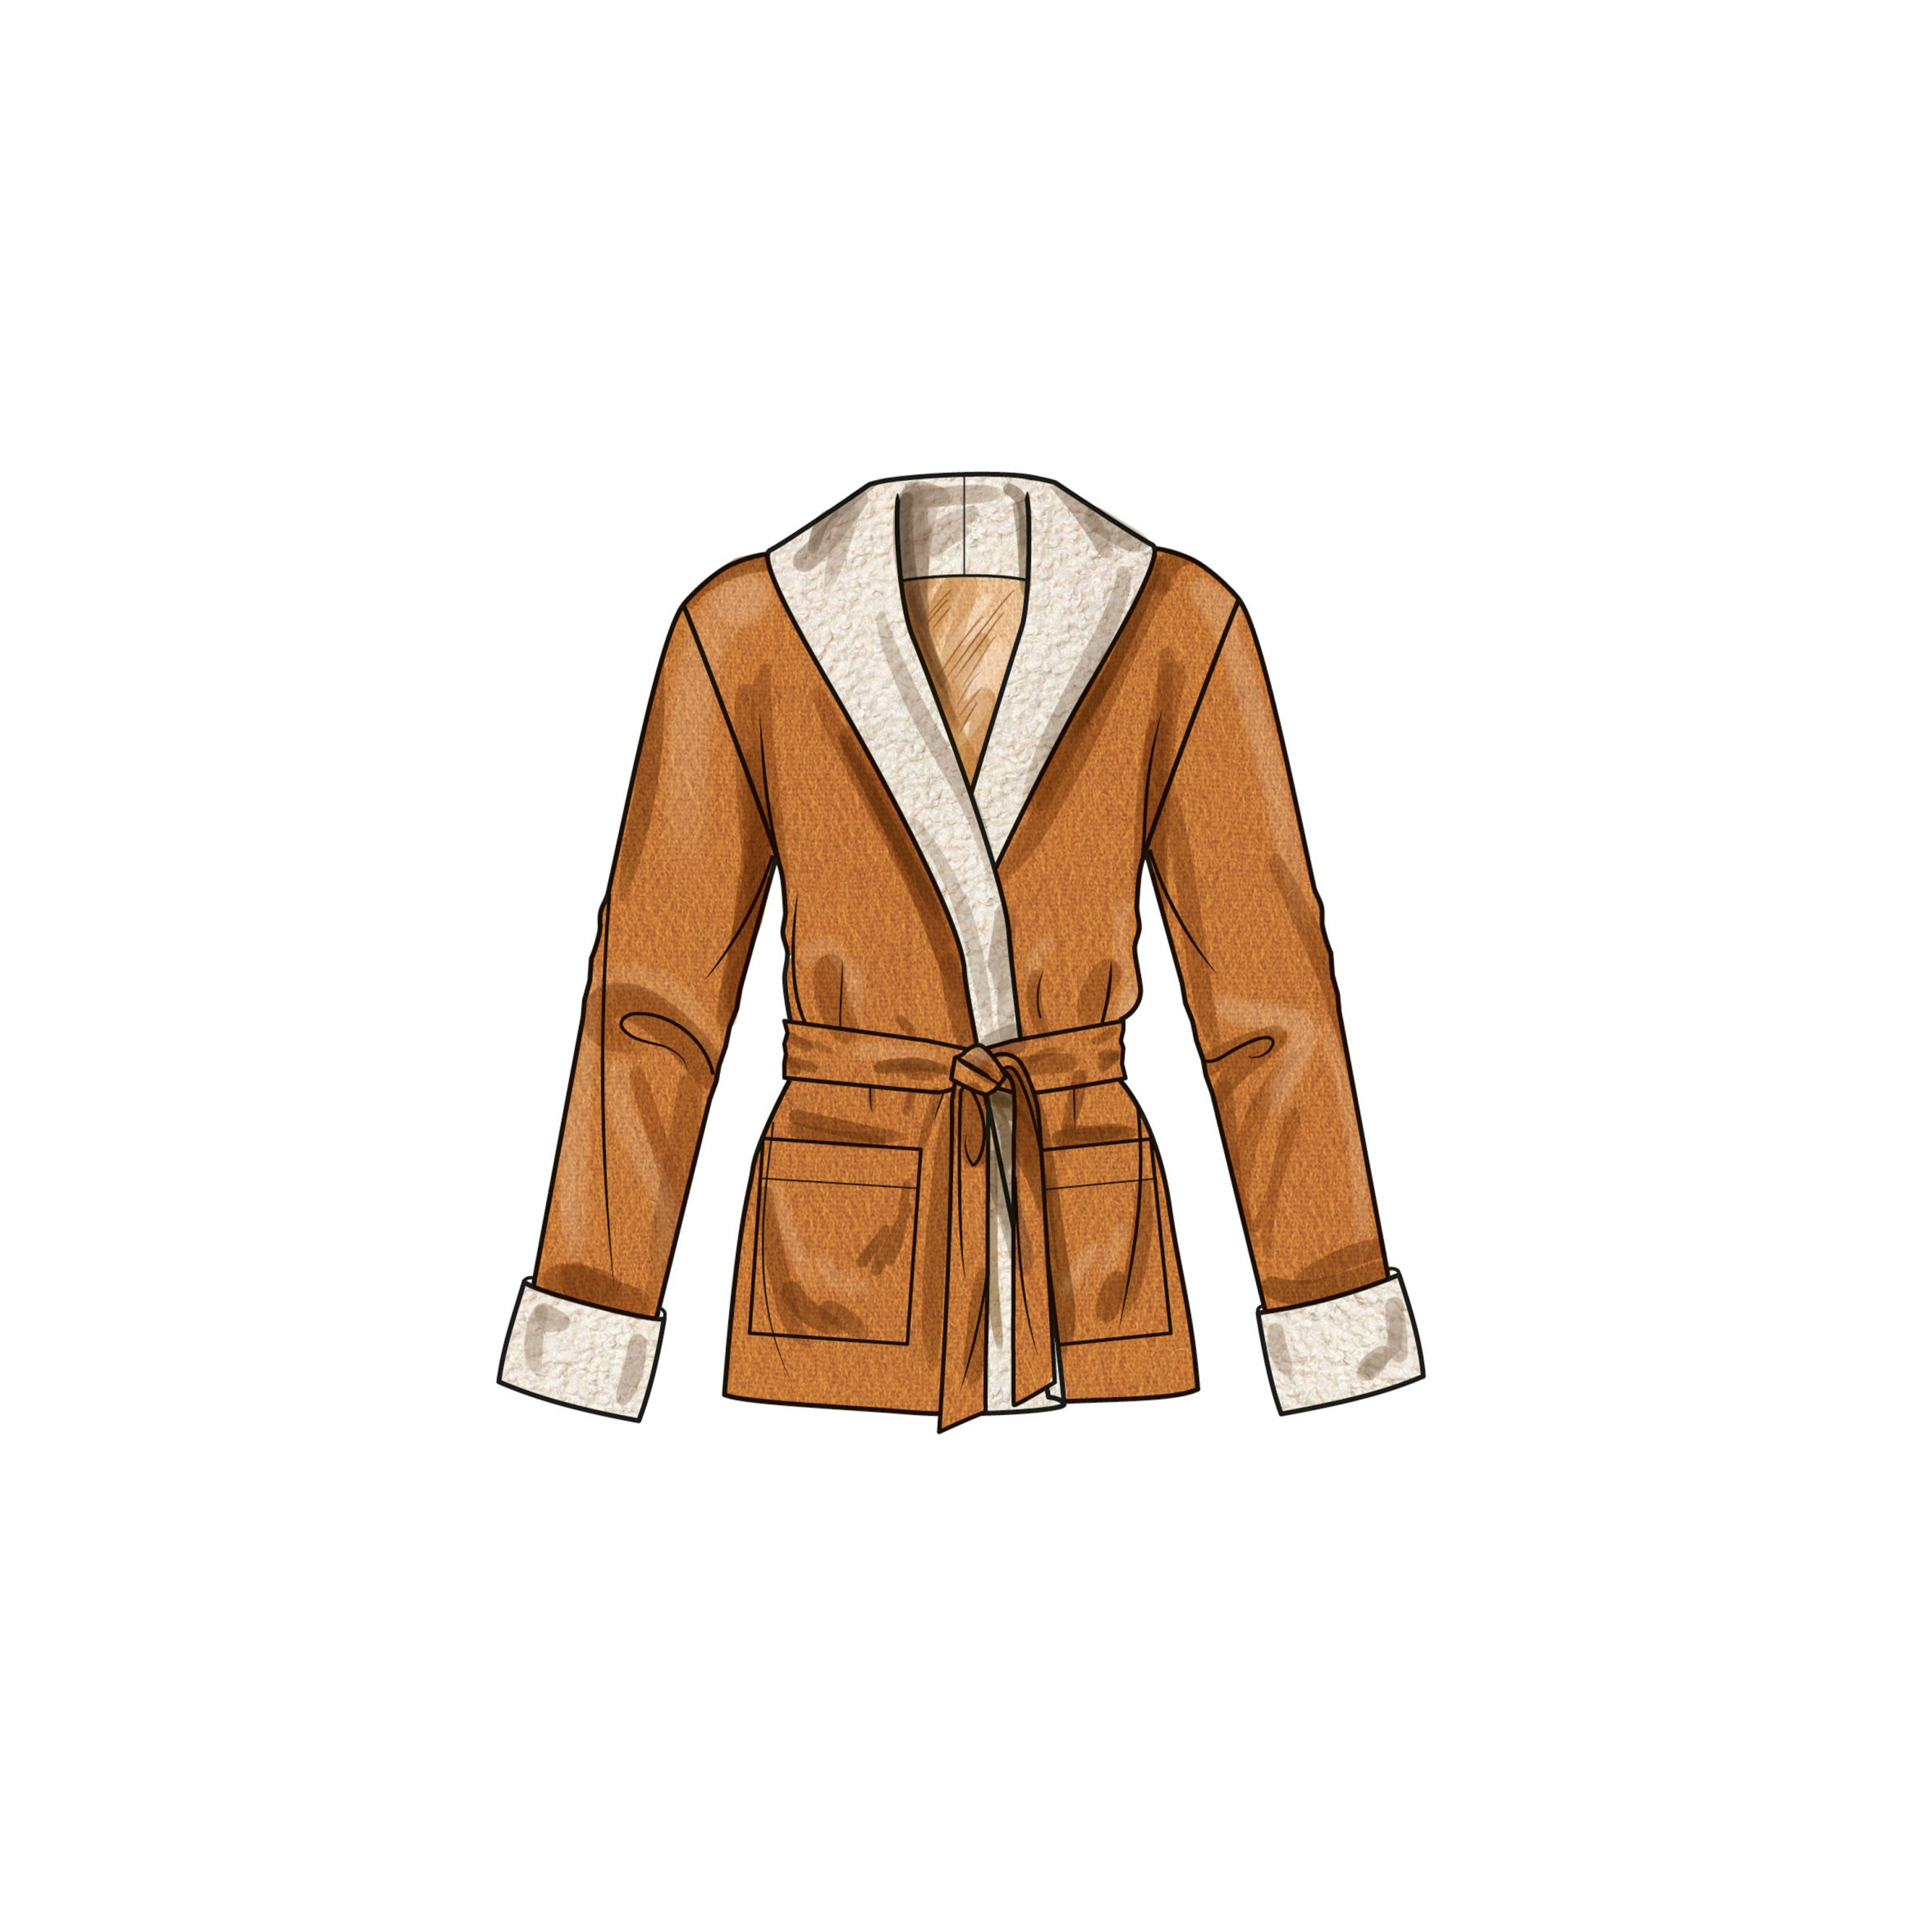 Simplicity Unisex Jacket, Waistcoat and Belt S9692